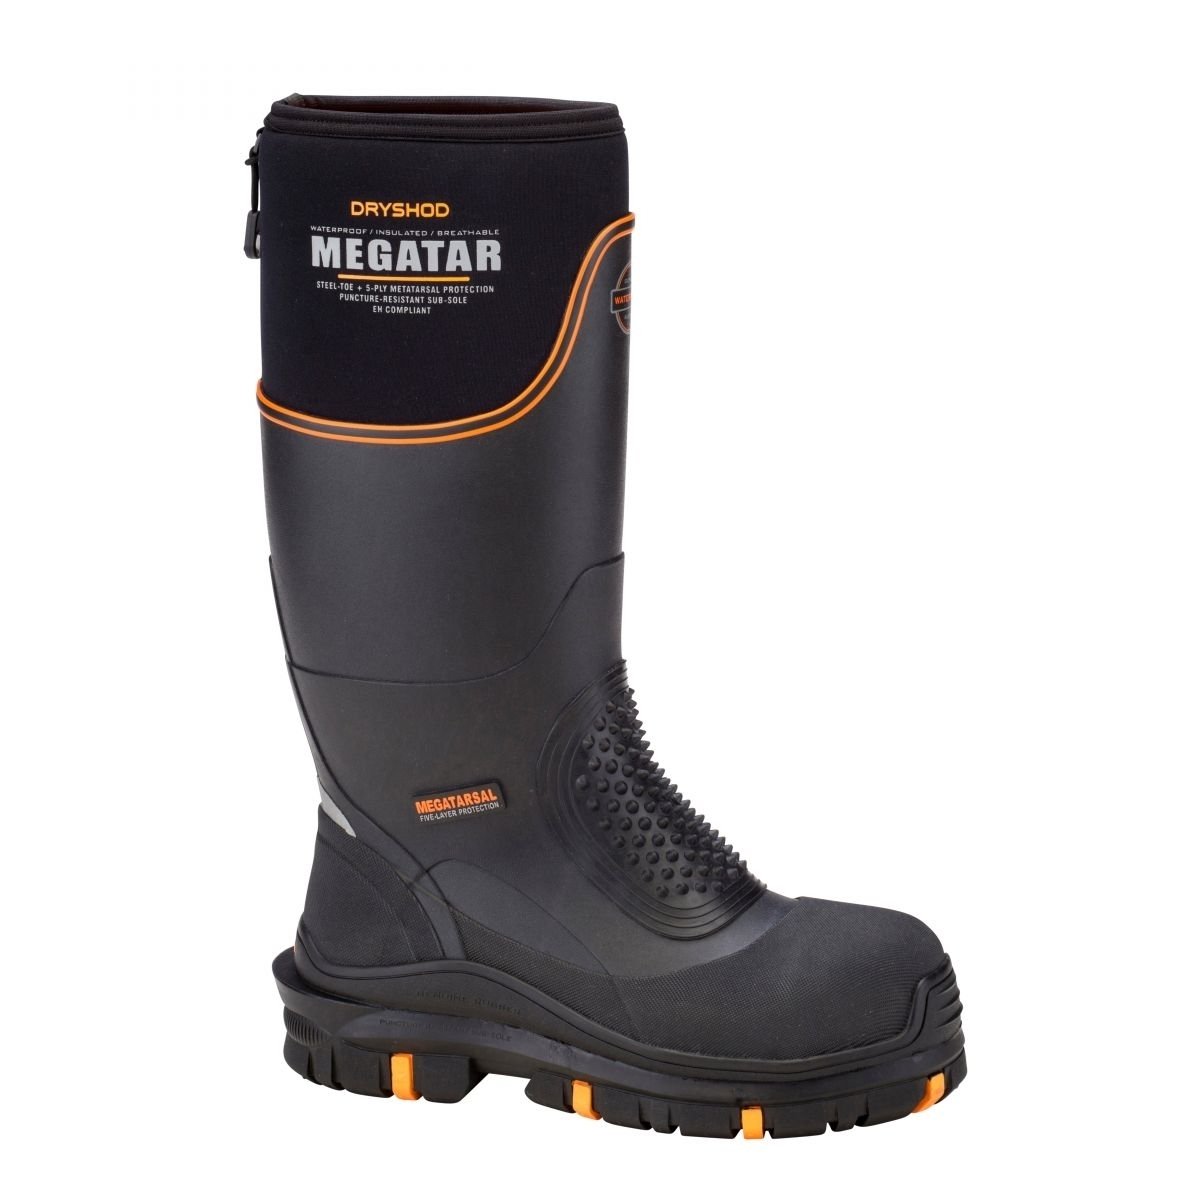 Dryshod Men's Megatar Steel Toe Metatarsal Guard Work Boot Black - MEG-MH-BK ONE SIZE BLACK/ORANGE - BLACK/ORANGE, 15